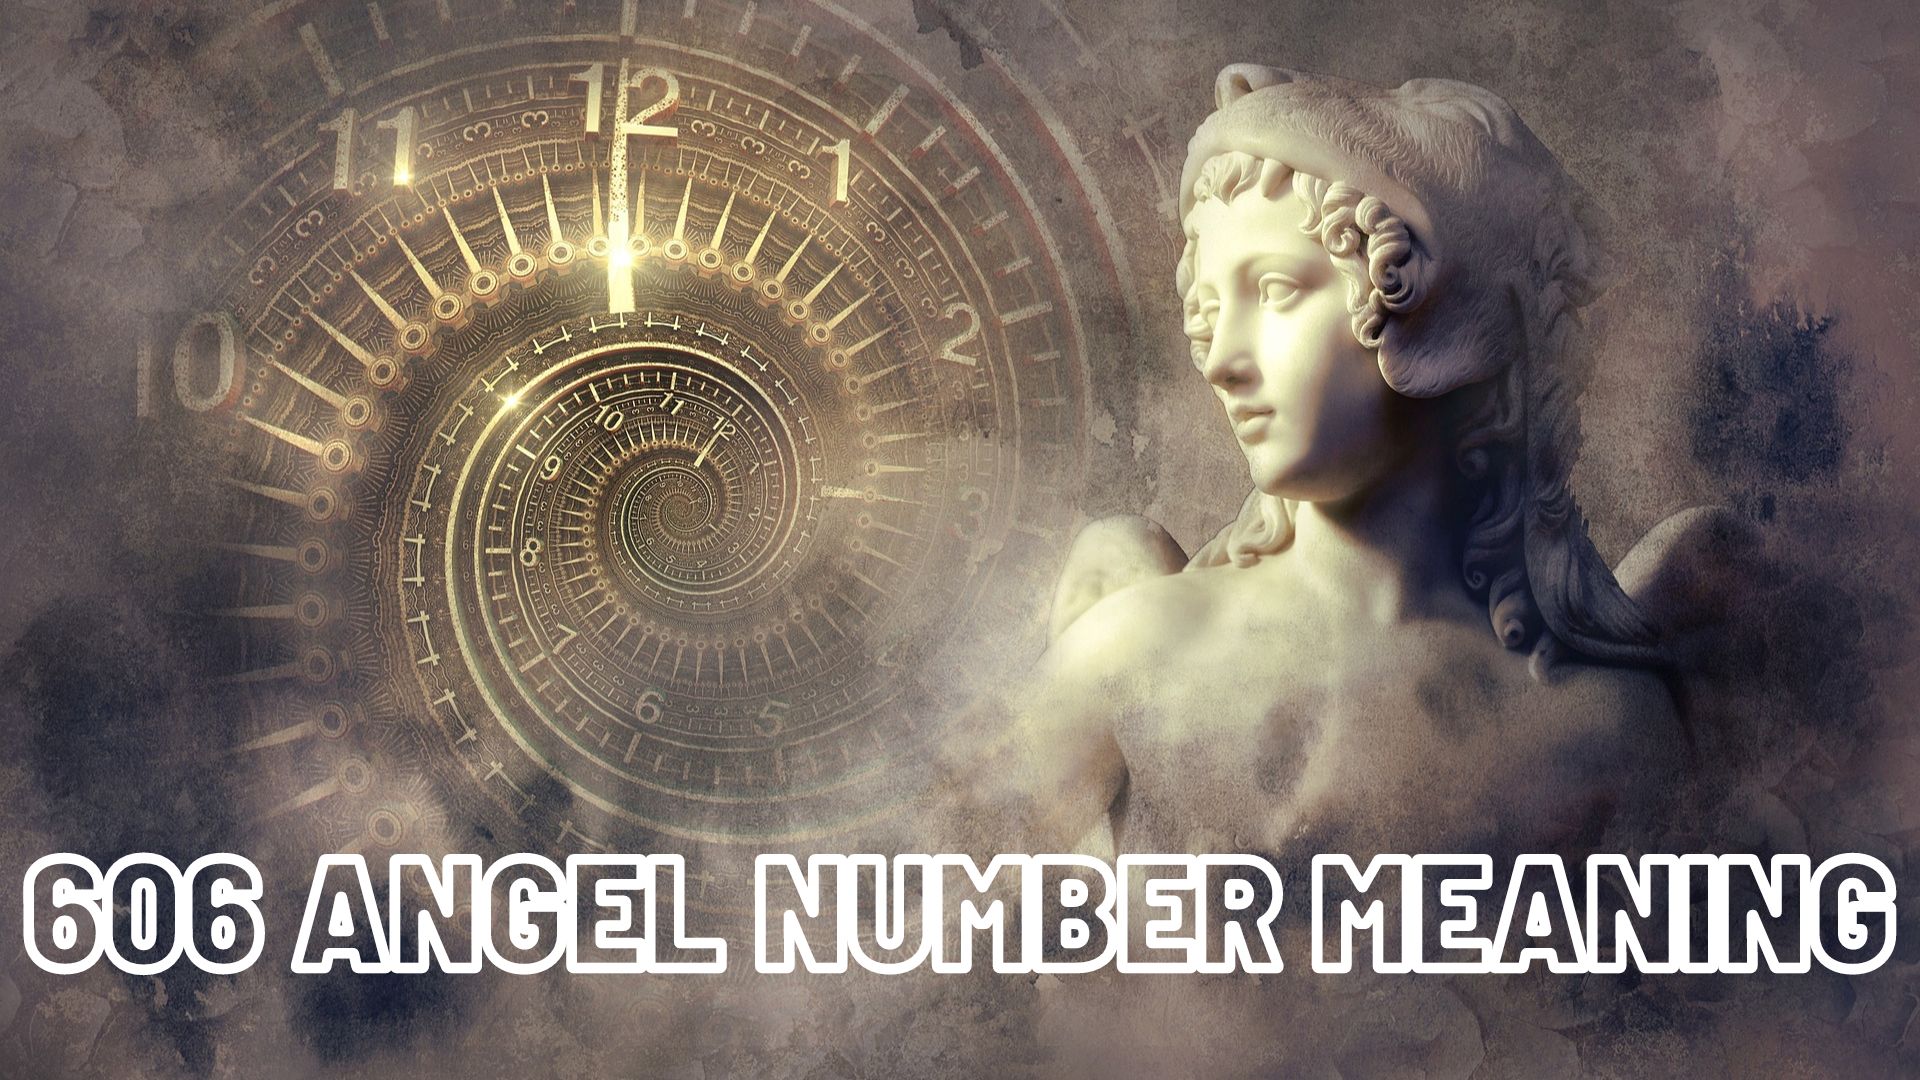 606 Angel Number Meaning - Make A Mental Change